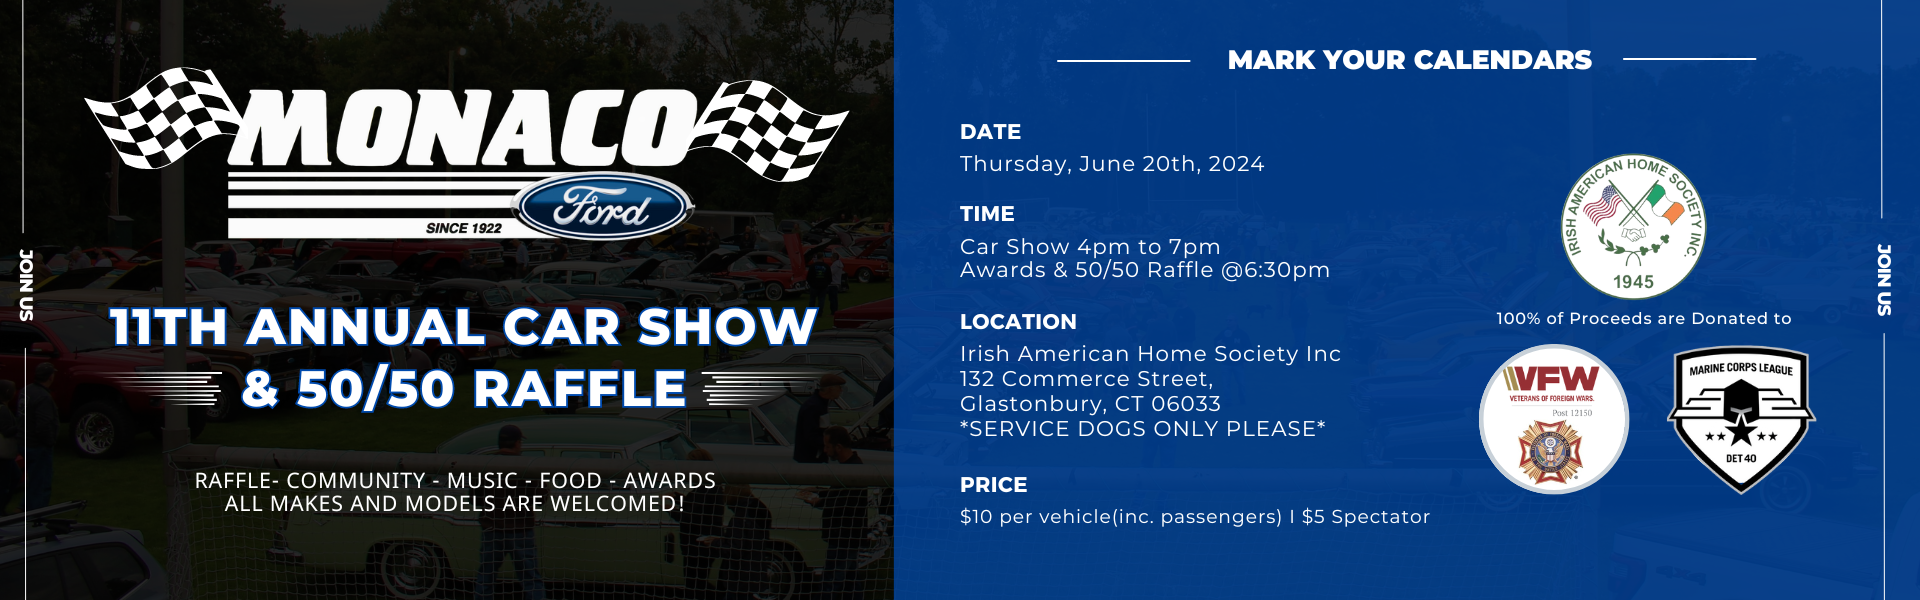 Monaco Ford 11TH Annual Car Show & 50/50 Raffle!